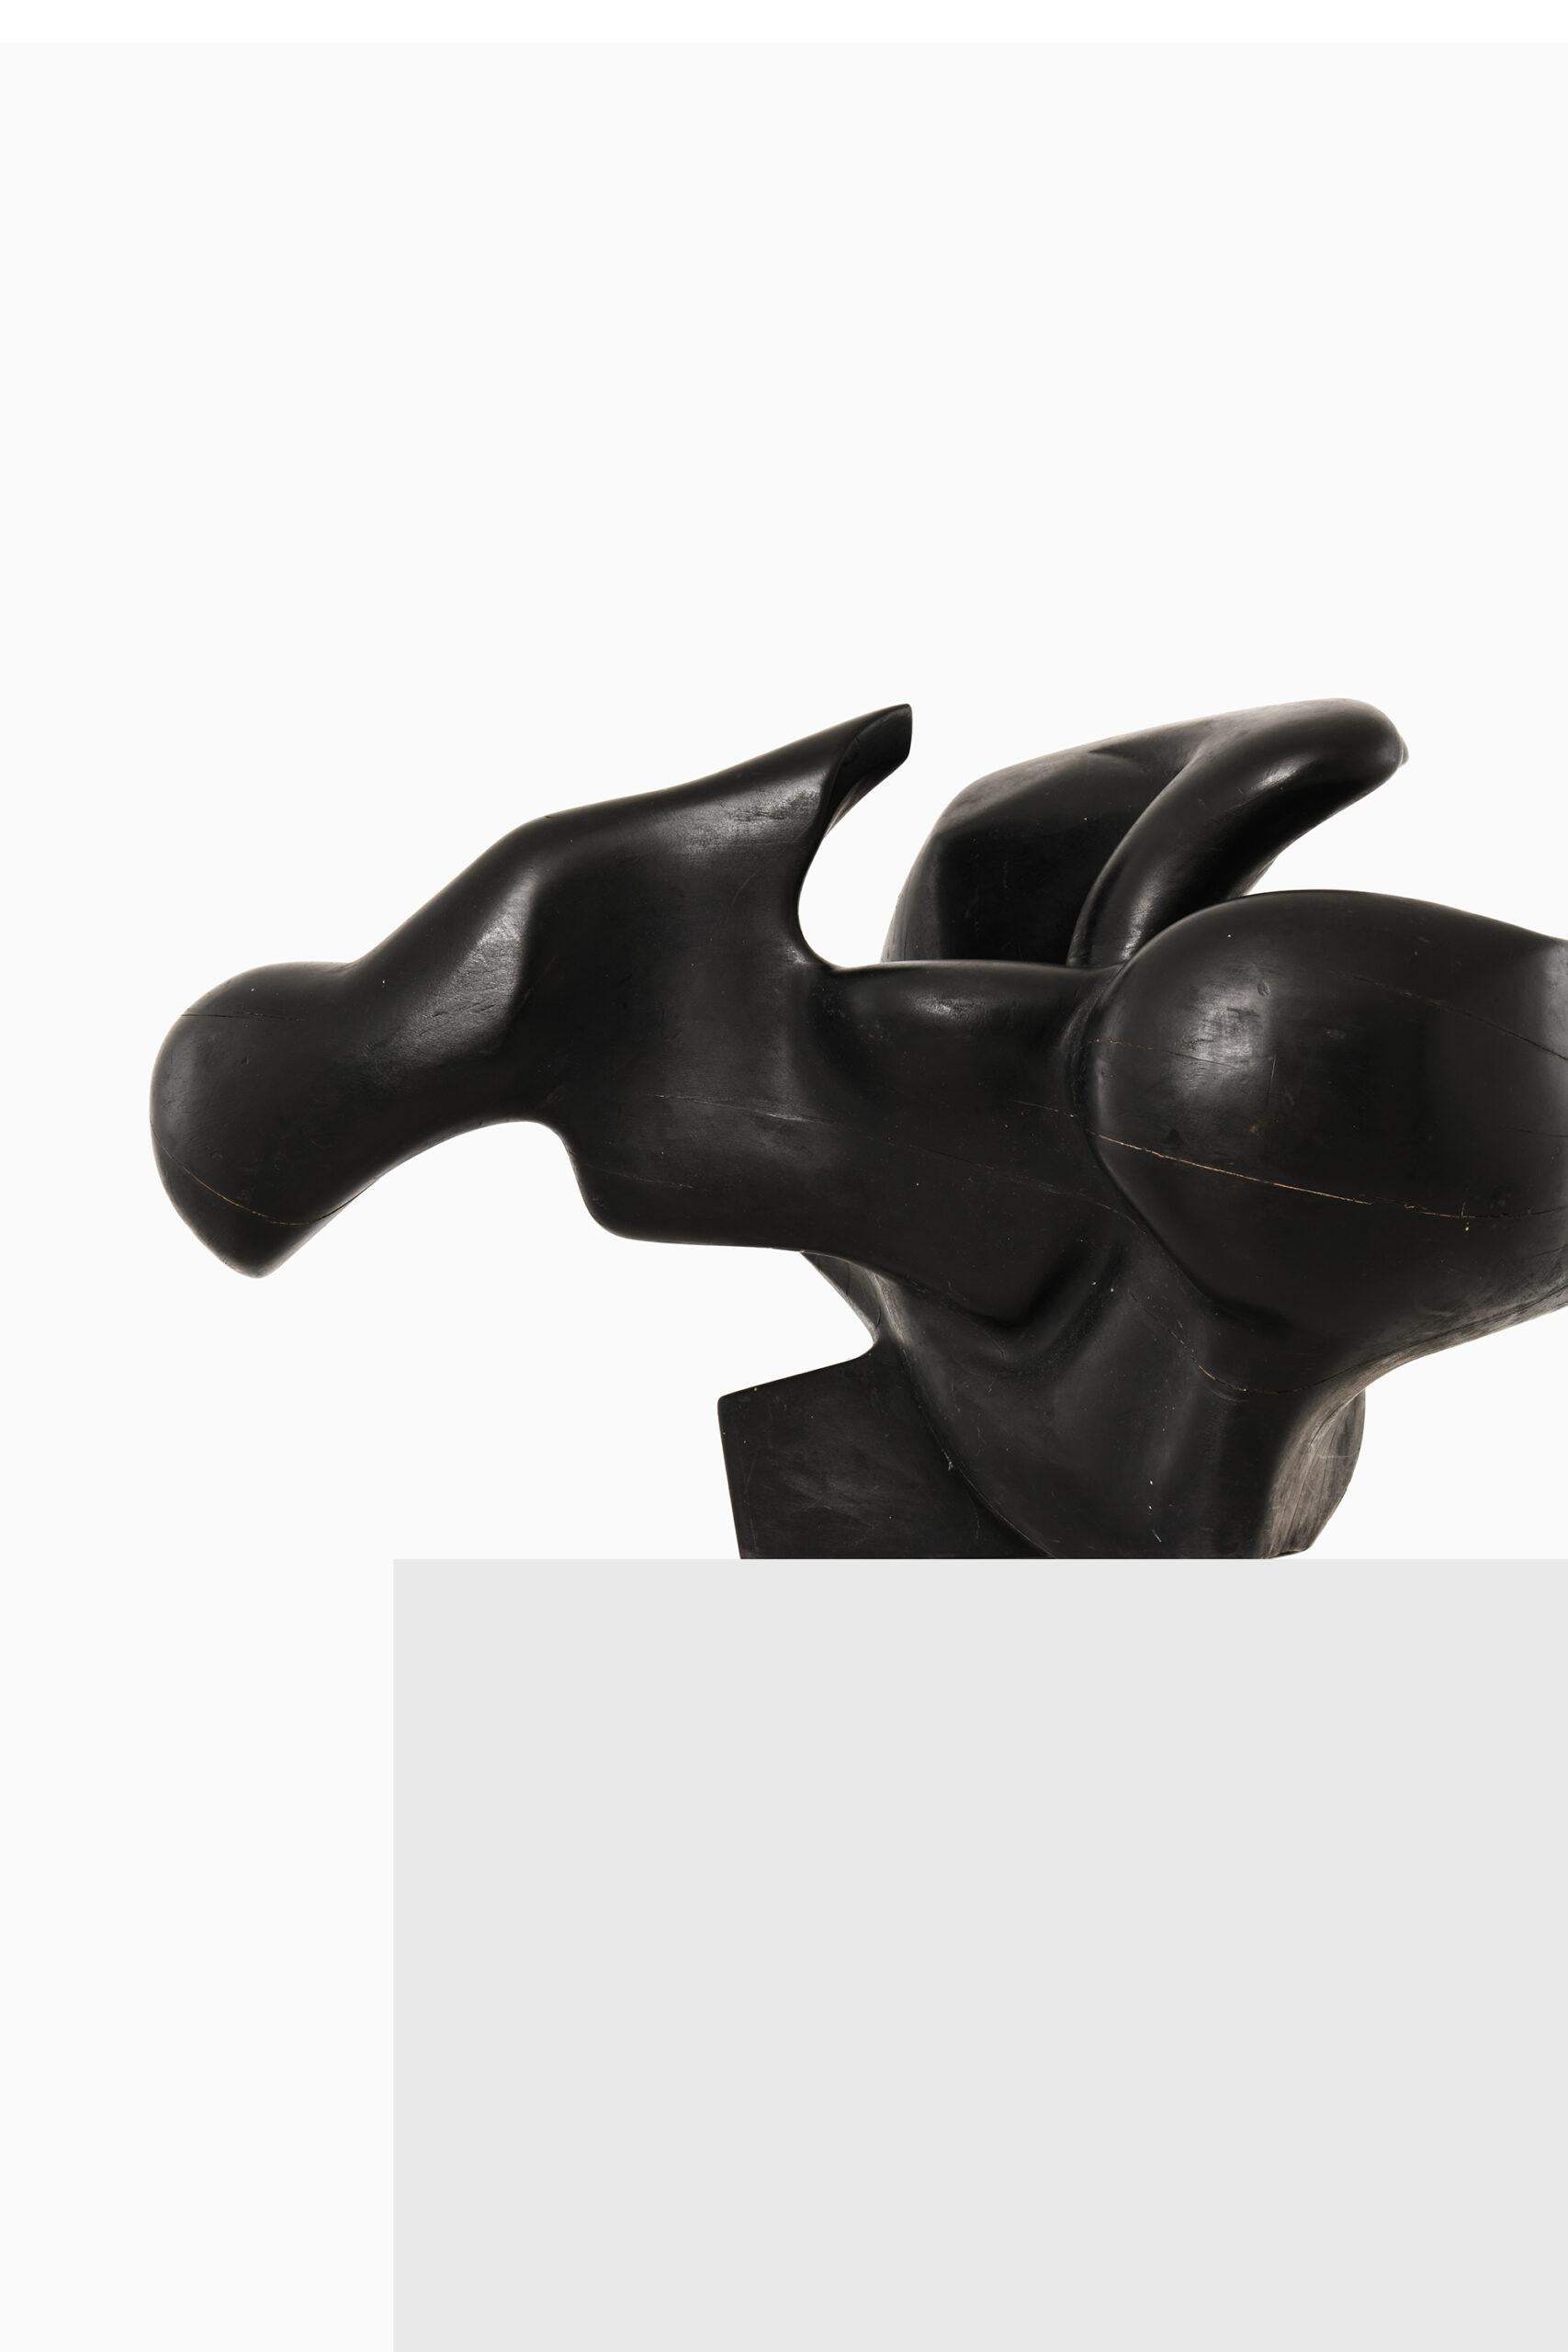 Scandinave moderne Sculpture de Thorkild Hoffmann Larsen en vente